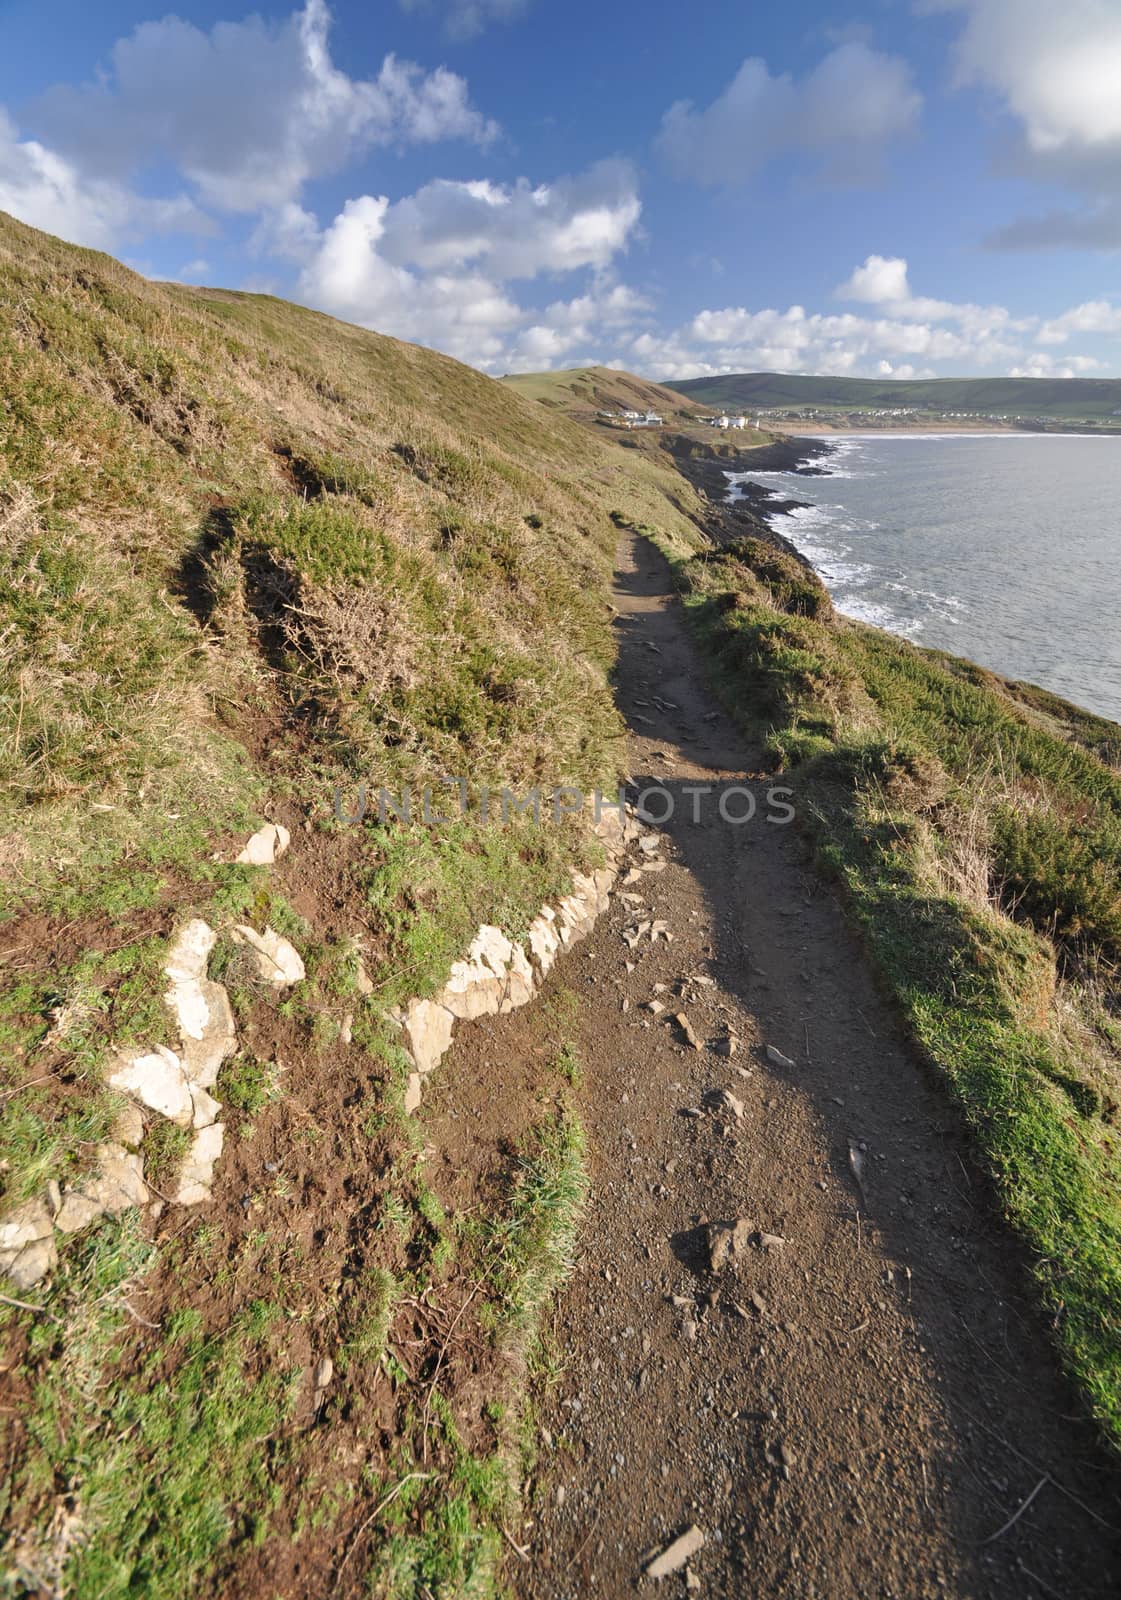 Southwest Coast footpath near Baggy Point headland looking back towards, Croyde, North Devon, England